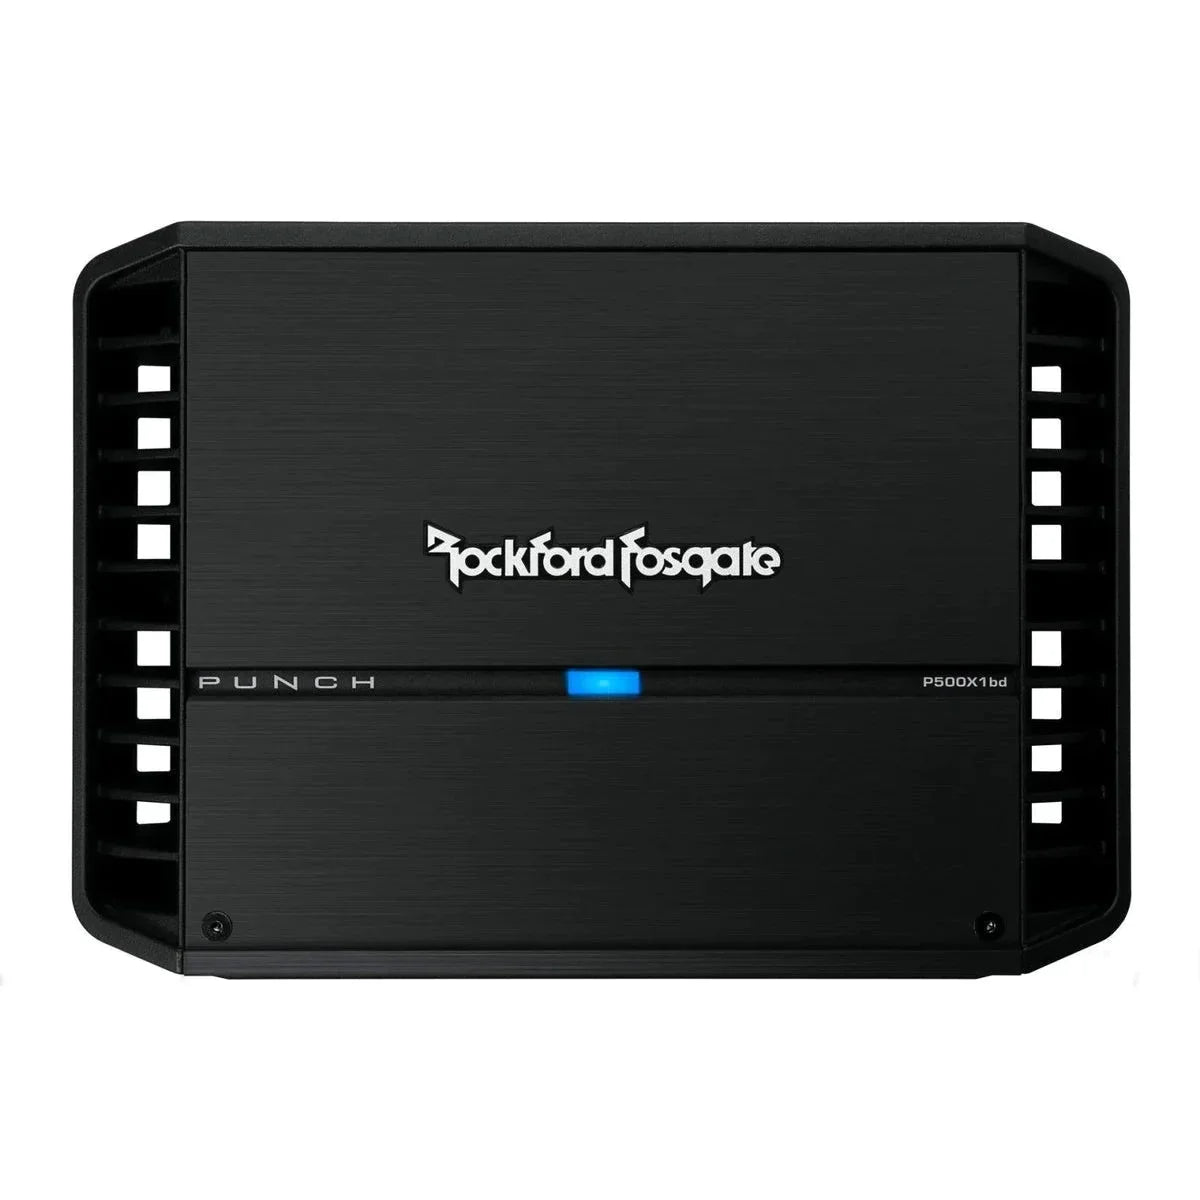 Rockford Fosgate-Punch P500X1bd-1-Kanal Verstärker-Masori.de